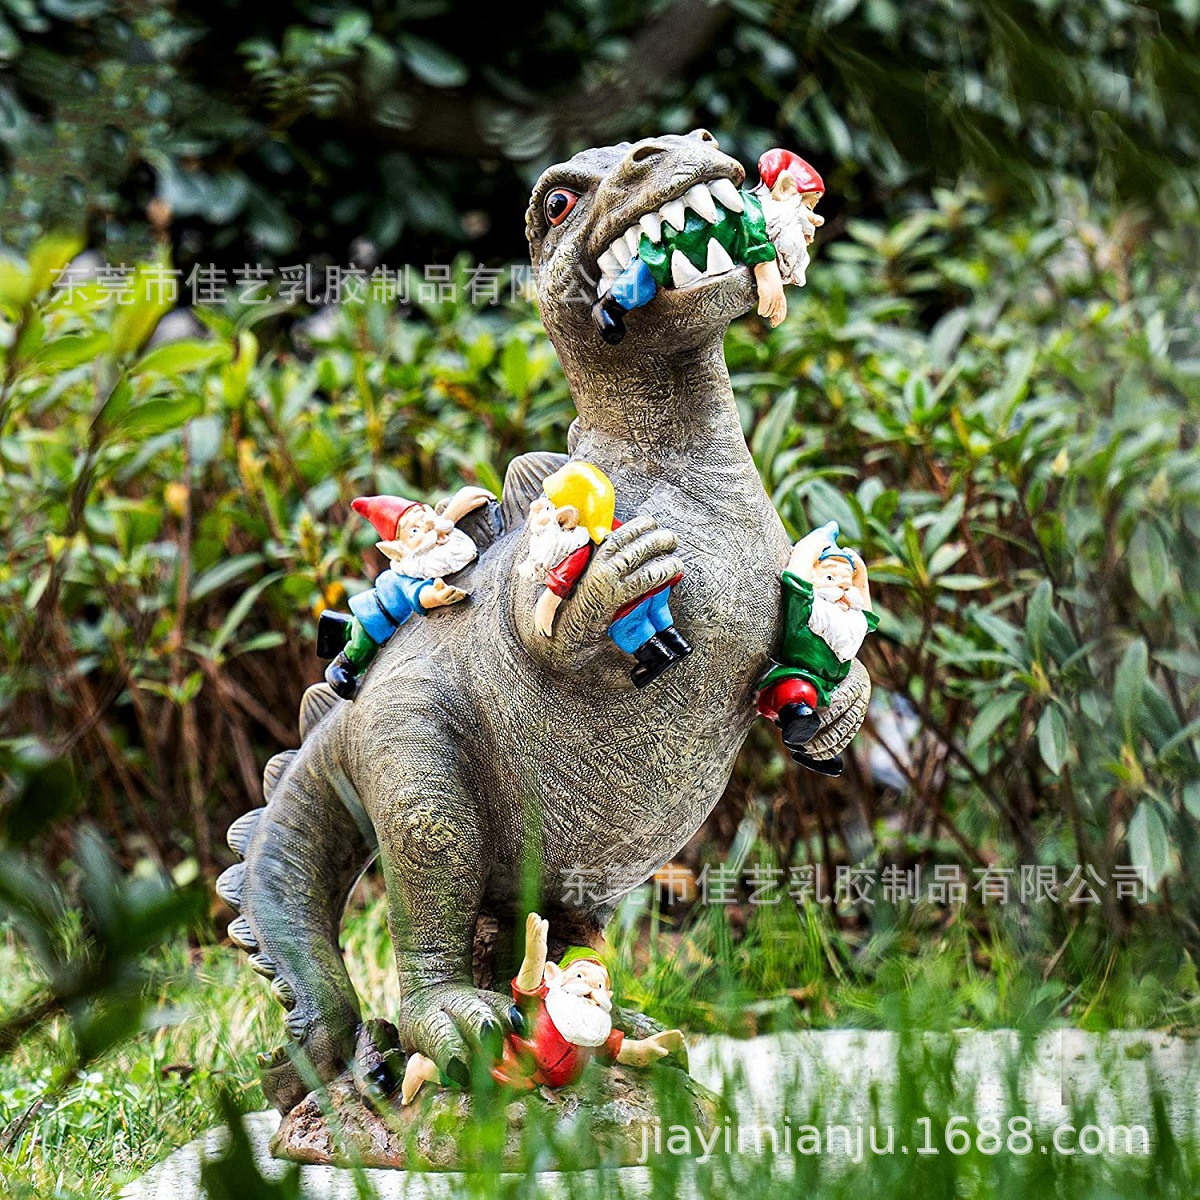 Outdoor Garden Dinosaur Dwarf Statue Decorative Resin Ornament Dinosaur Eating Dwarf Garden Art Decorative Ornament